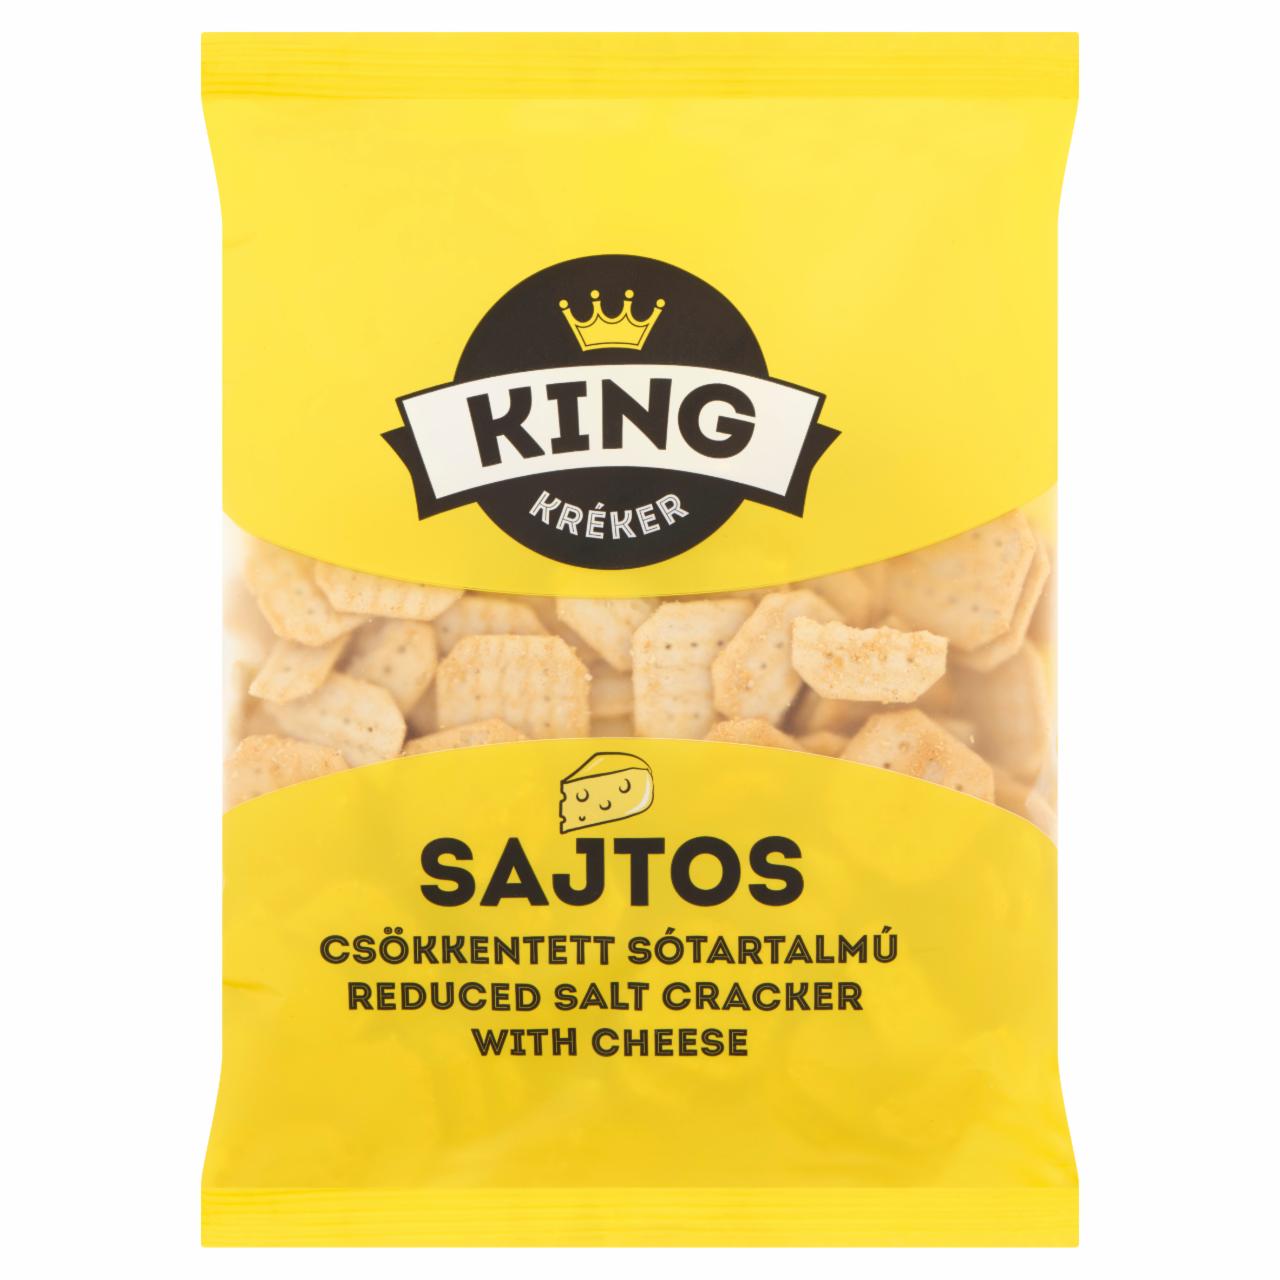 Képek - King csökkentett sótartalmú sajtos kréker 100 g